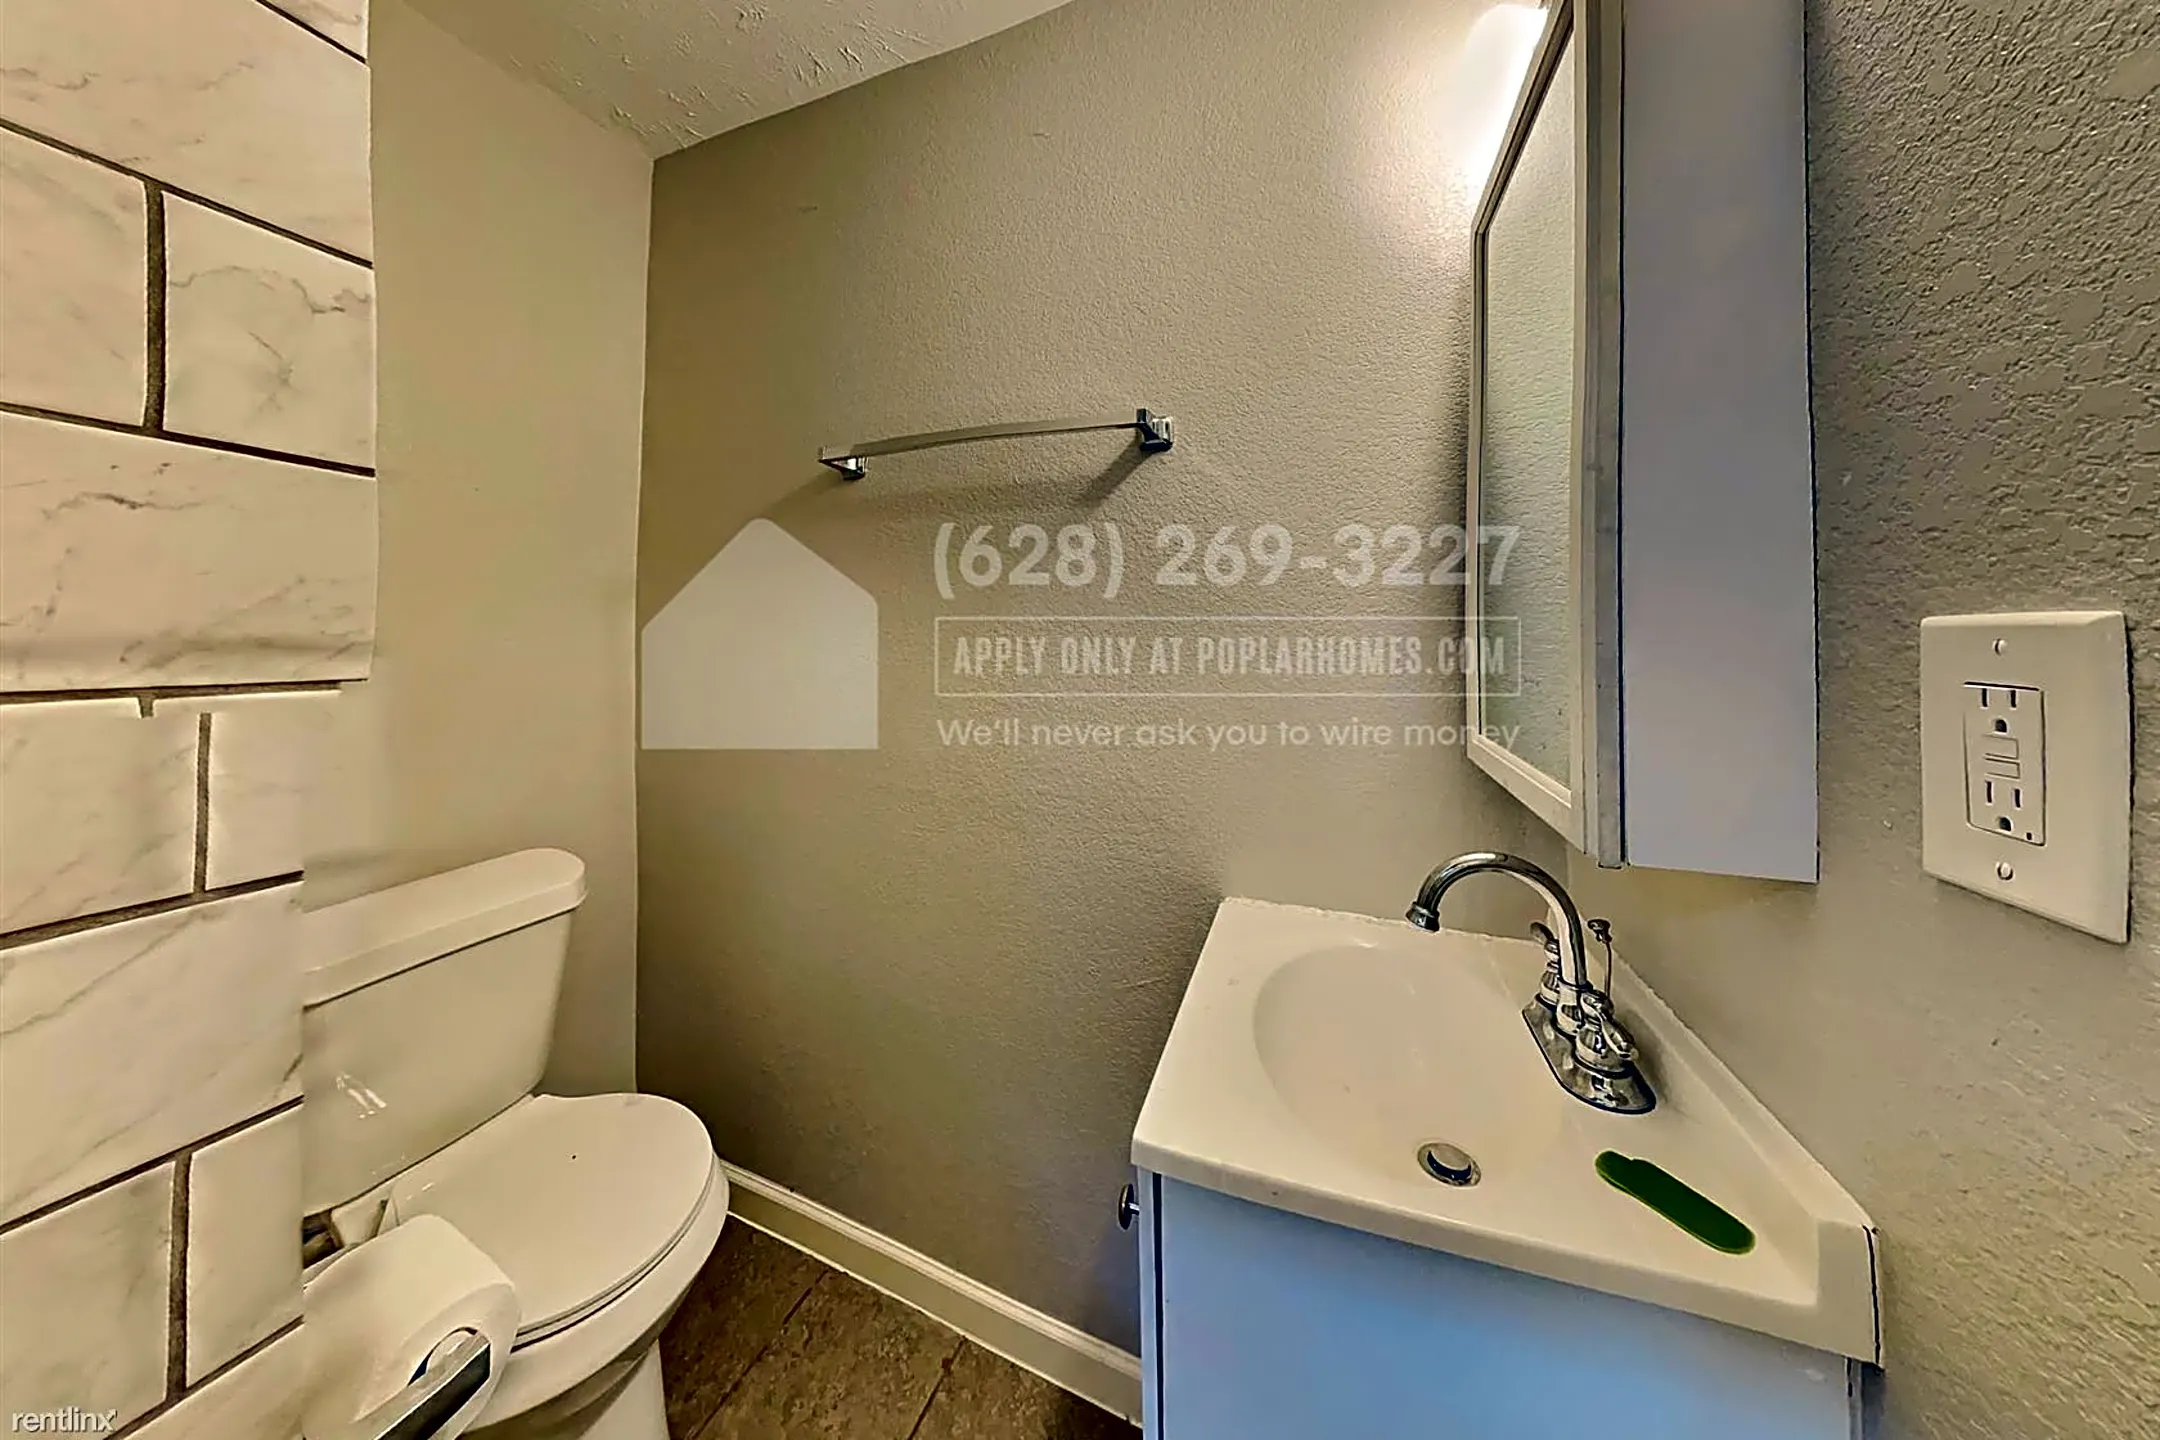 Bathroom - 2514 Gano St - Houston, TX